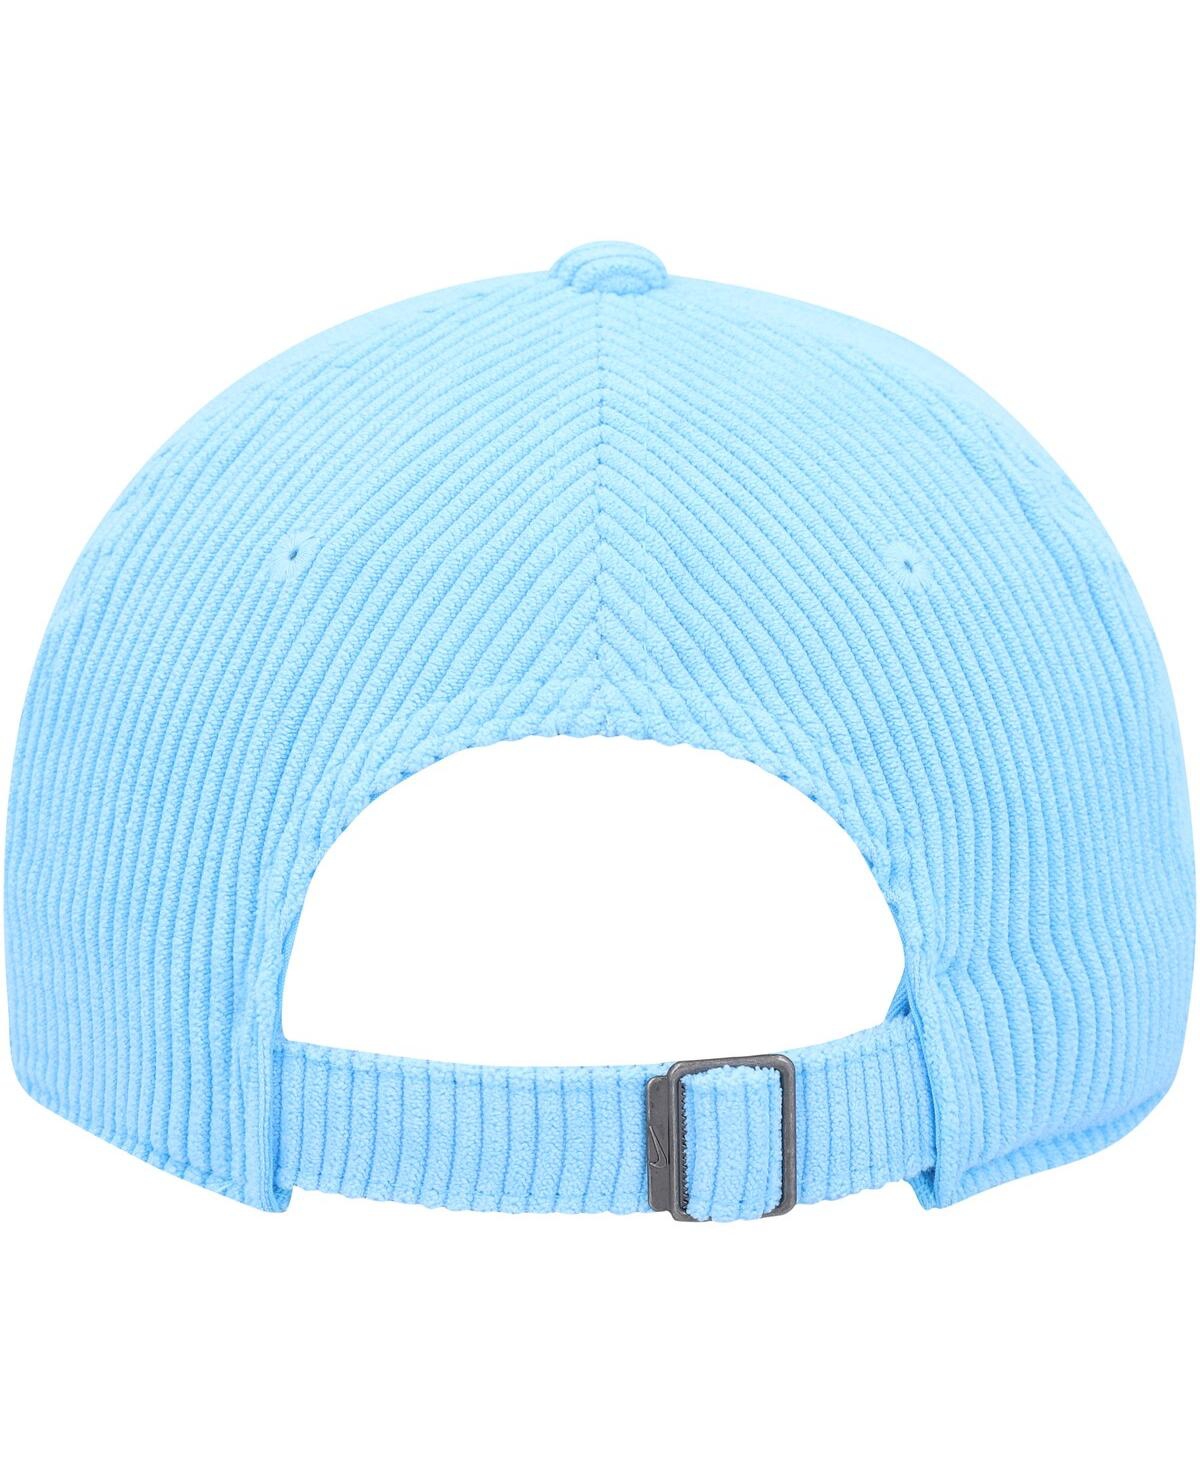 Shop Nike Men's And Women's  Light Blue Corduroy Lifestyle Club Adjustable Hat